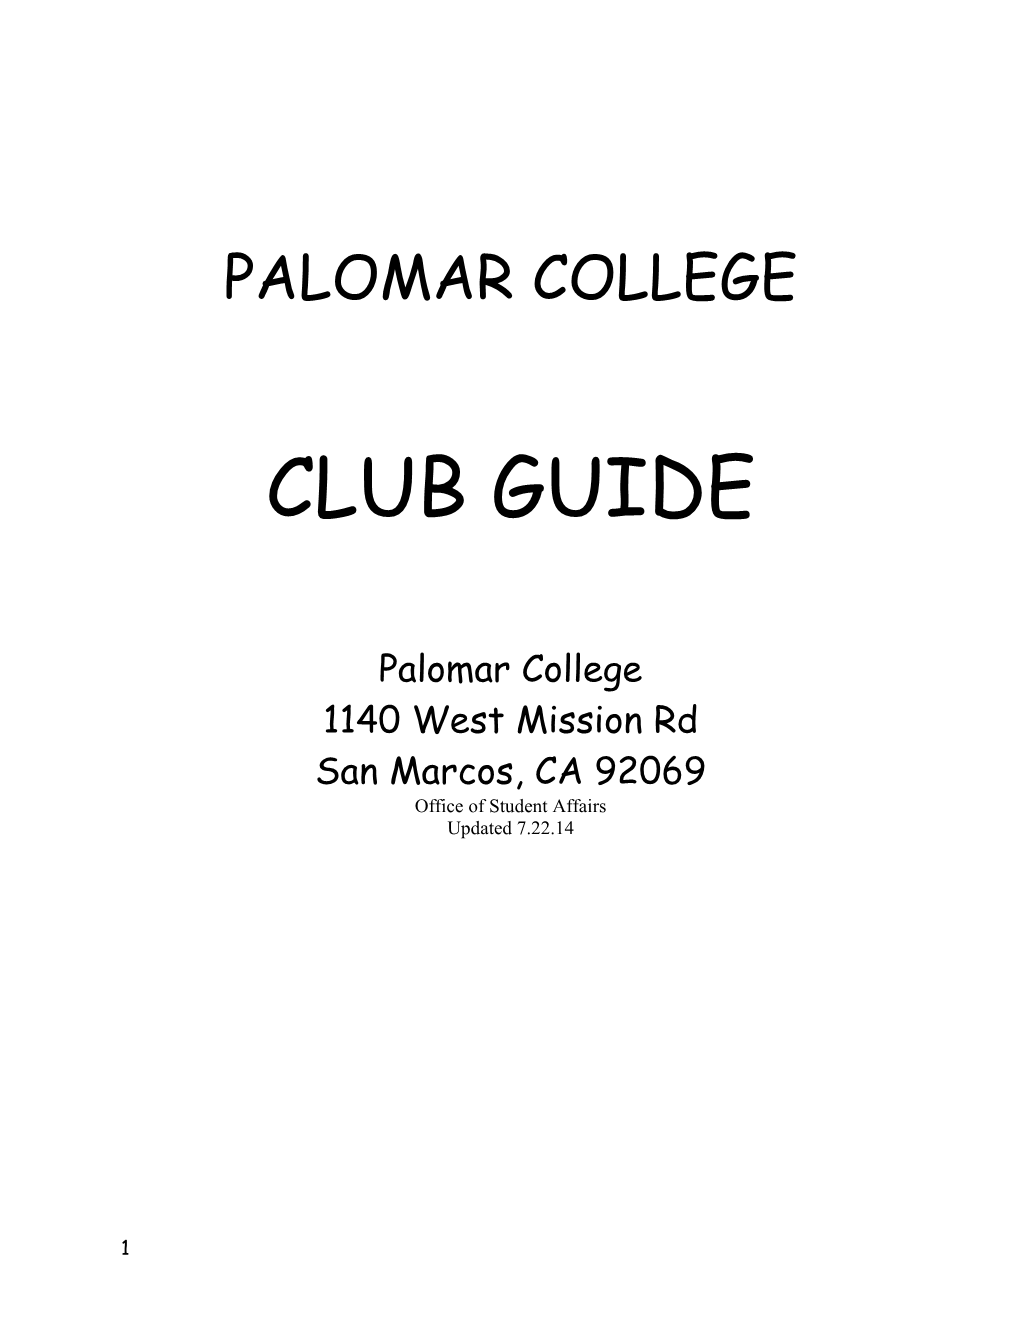 Palomar College Mission Statement